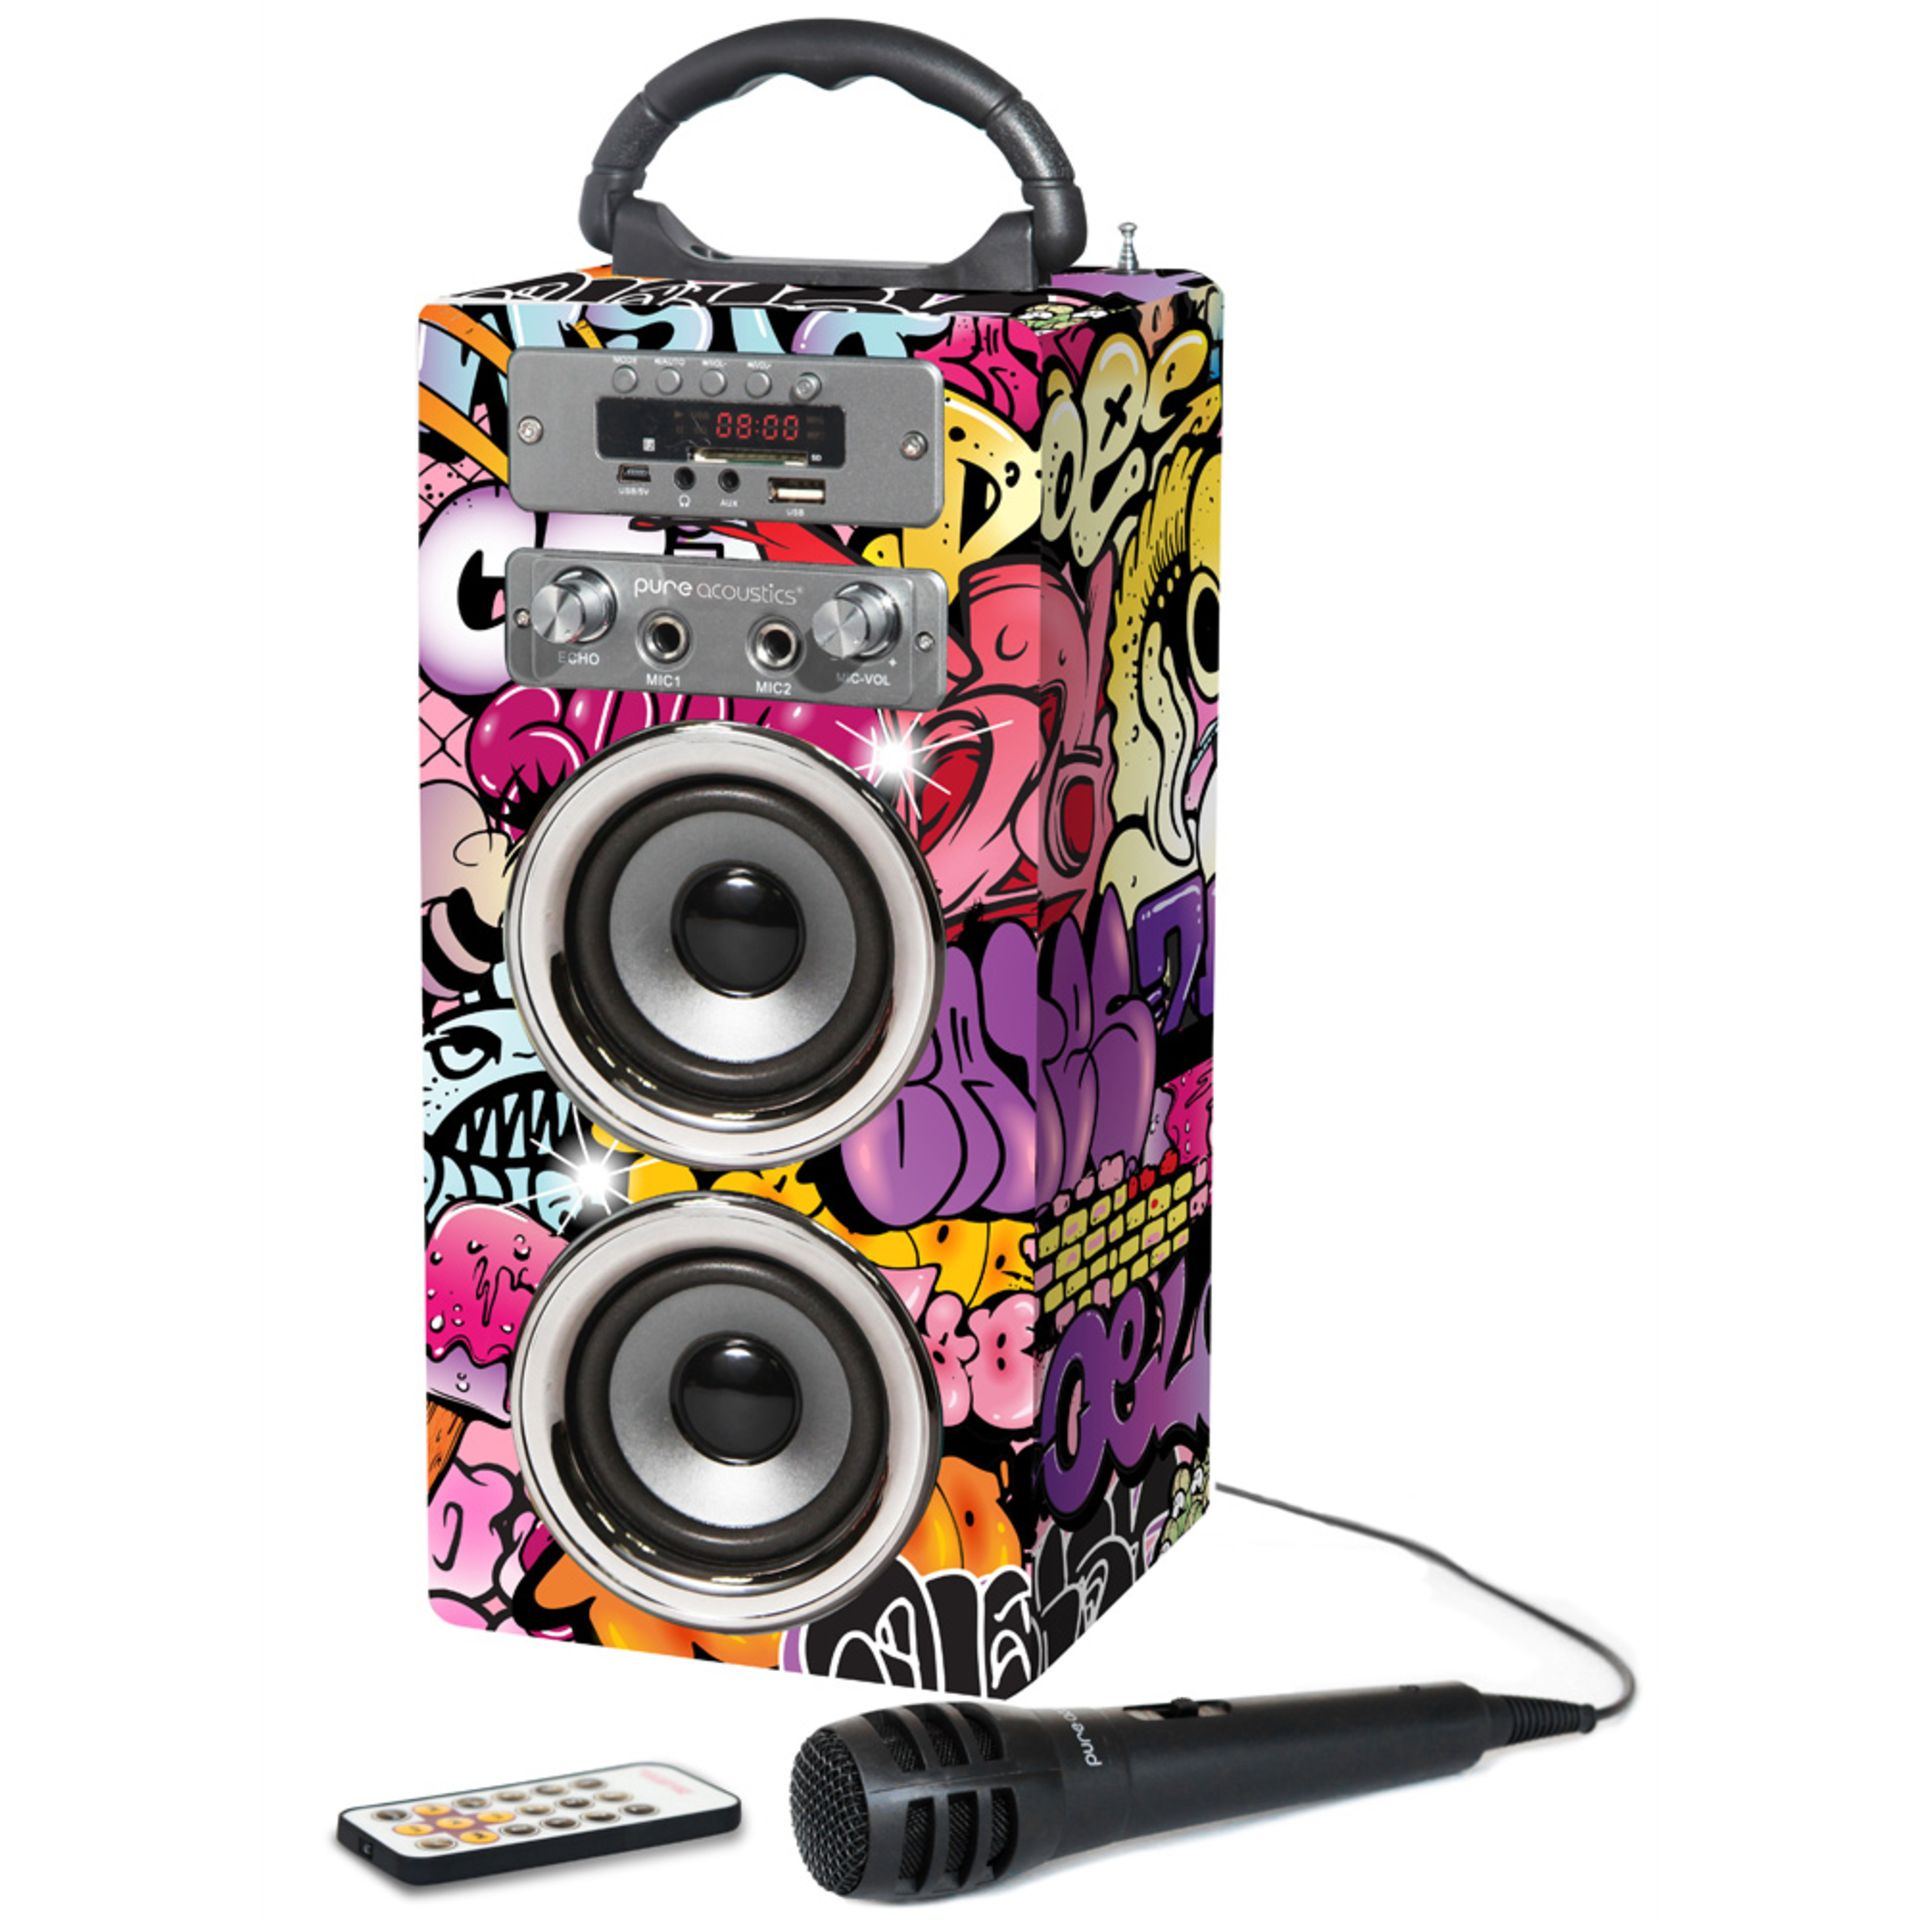 V *TRADE QTY* Brand New Pure Acoustics Graffiti Portable Karaoke Machine ISP £29.98 (Amazon) X 6